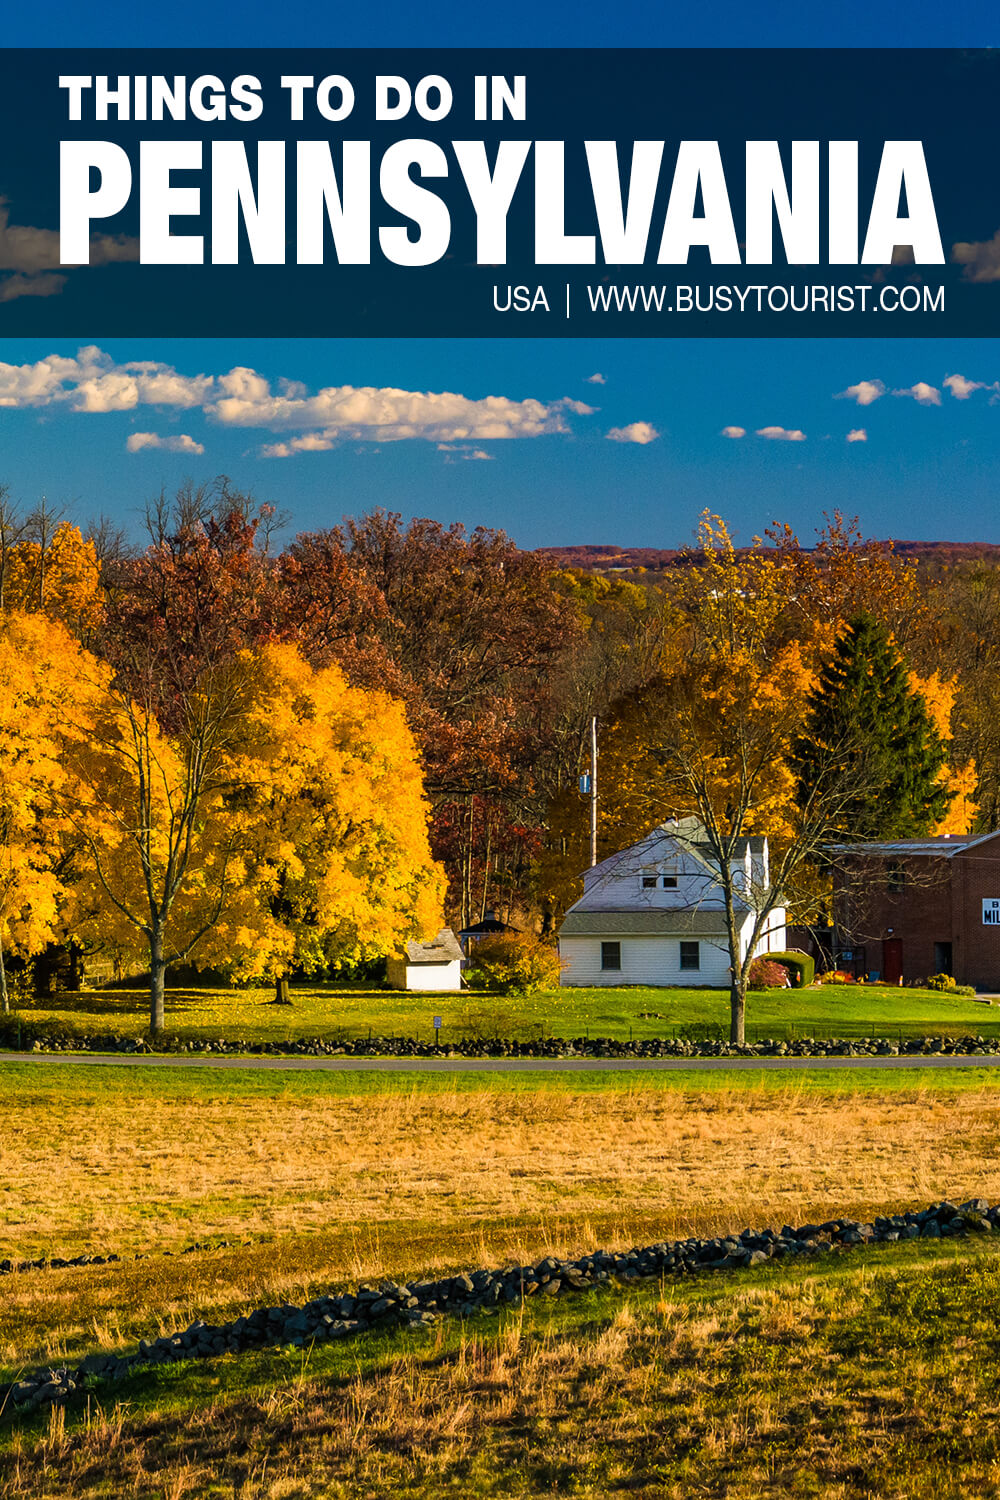 pennsylvania tourism website